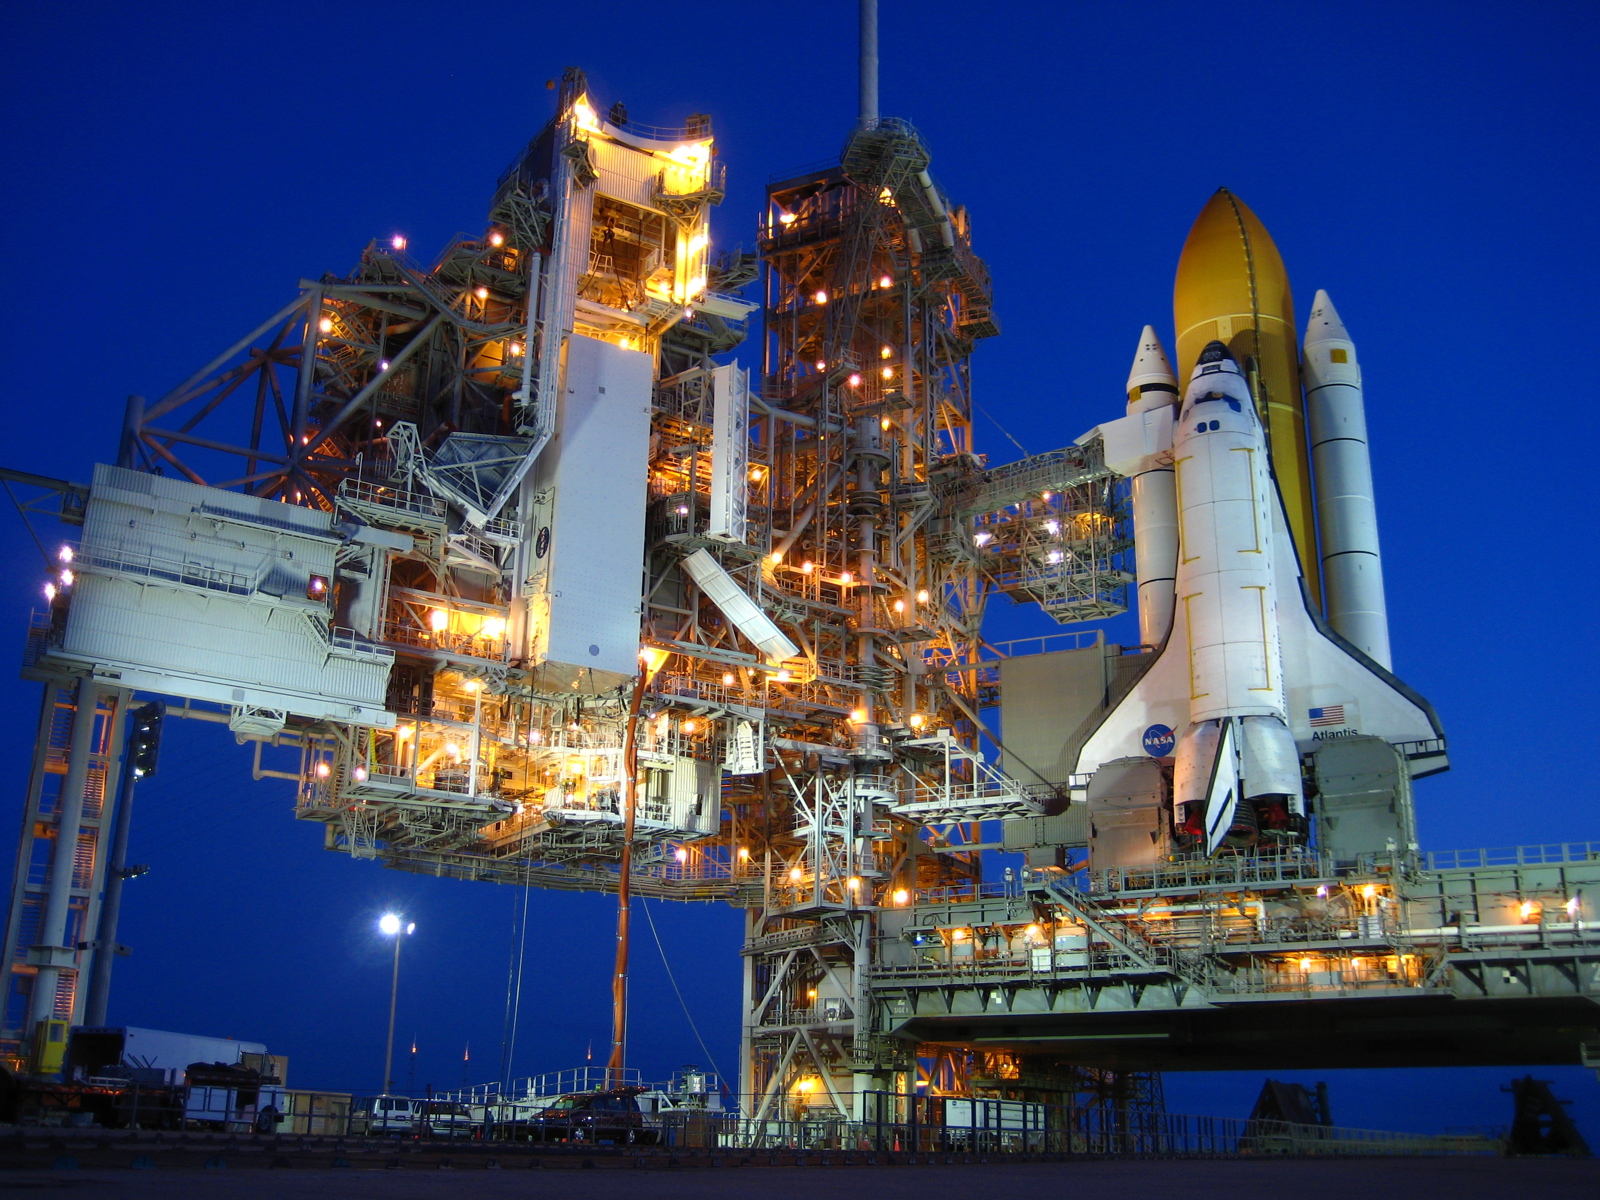 Popular Space Shuttle Atlantis Image for Phone